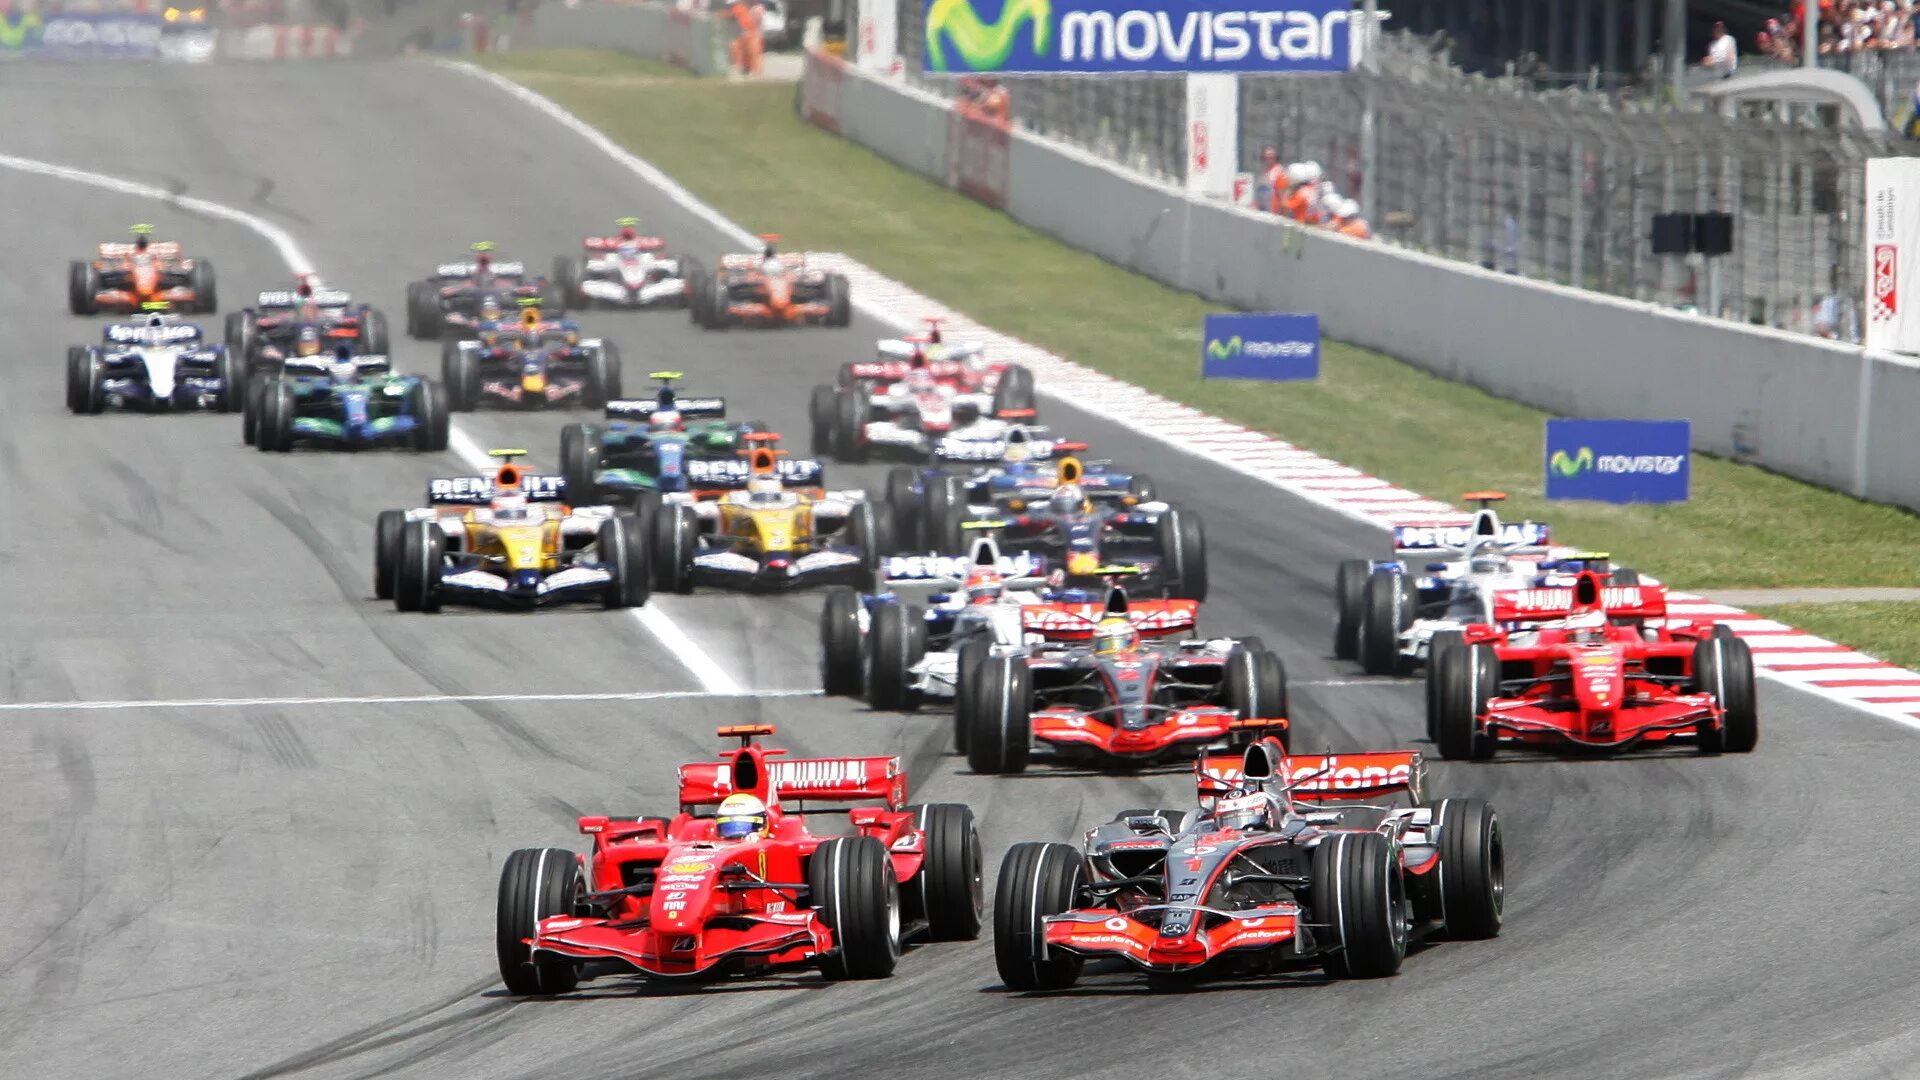 MCLAREN f1 2015. Ф1 гонка. Гонки Formula 1. Феррари ф1.